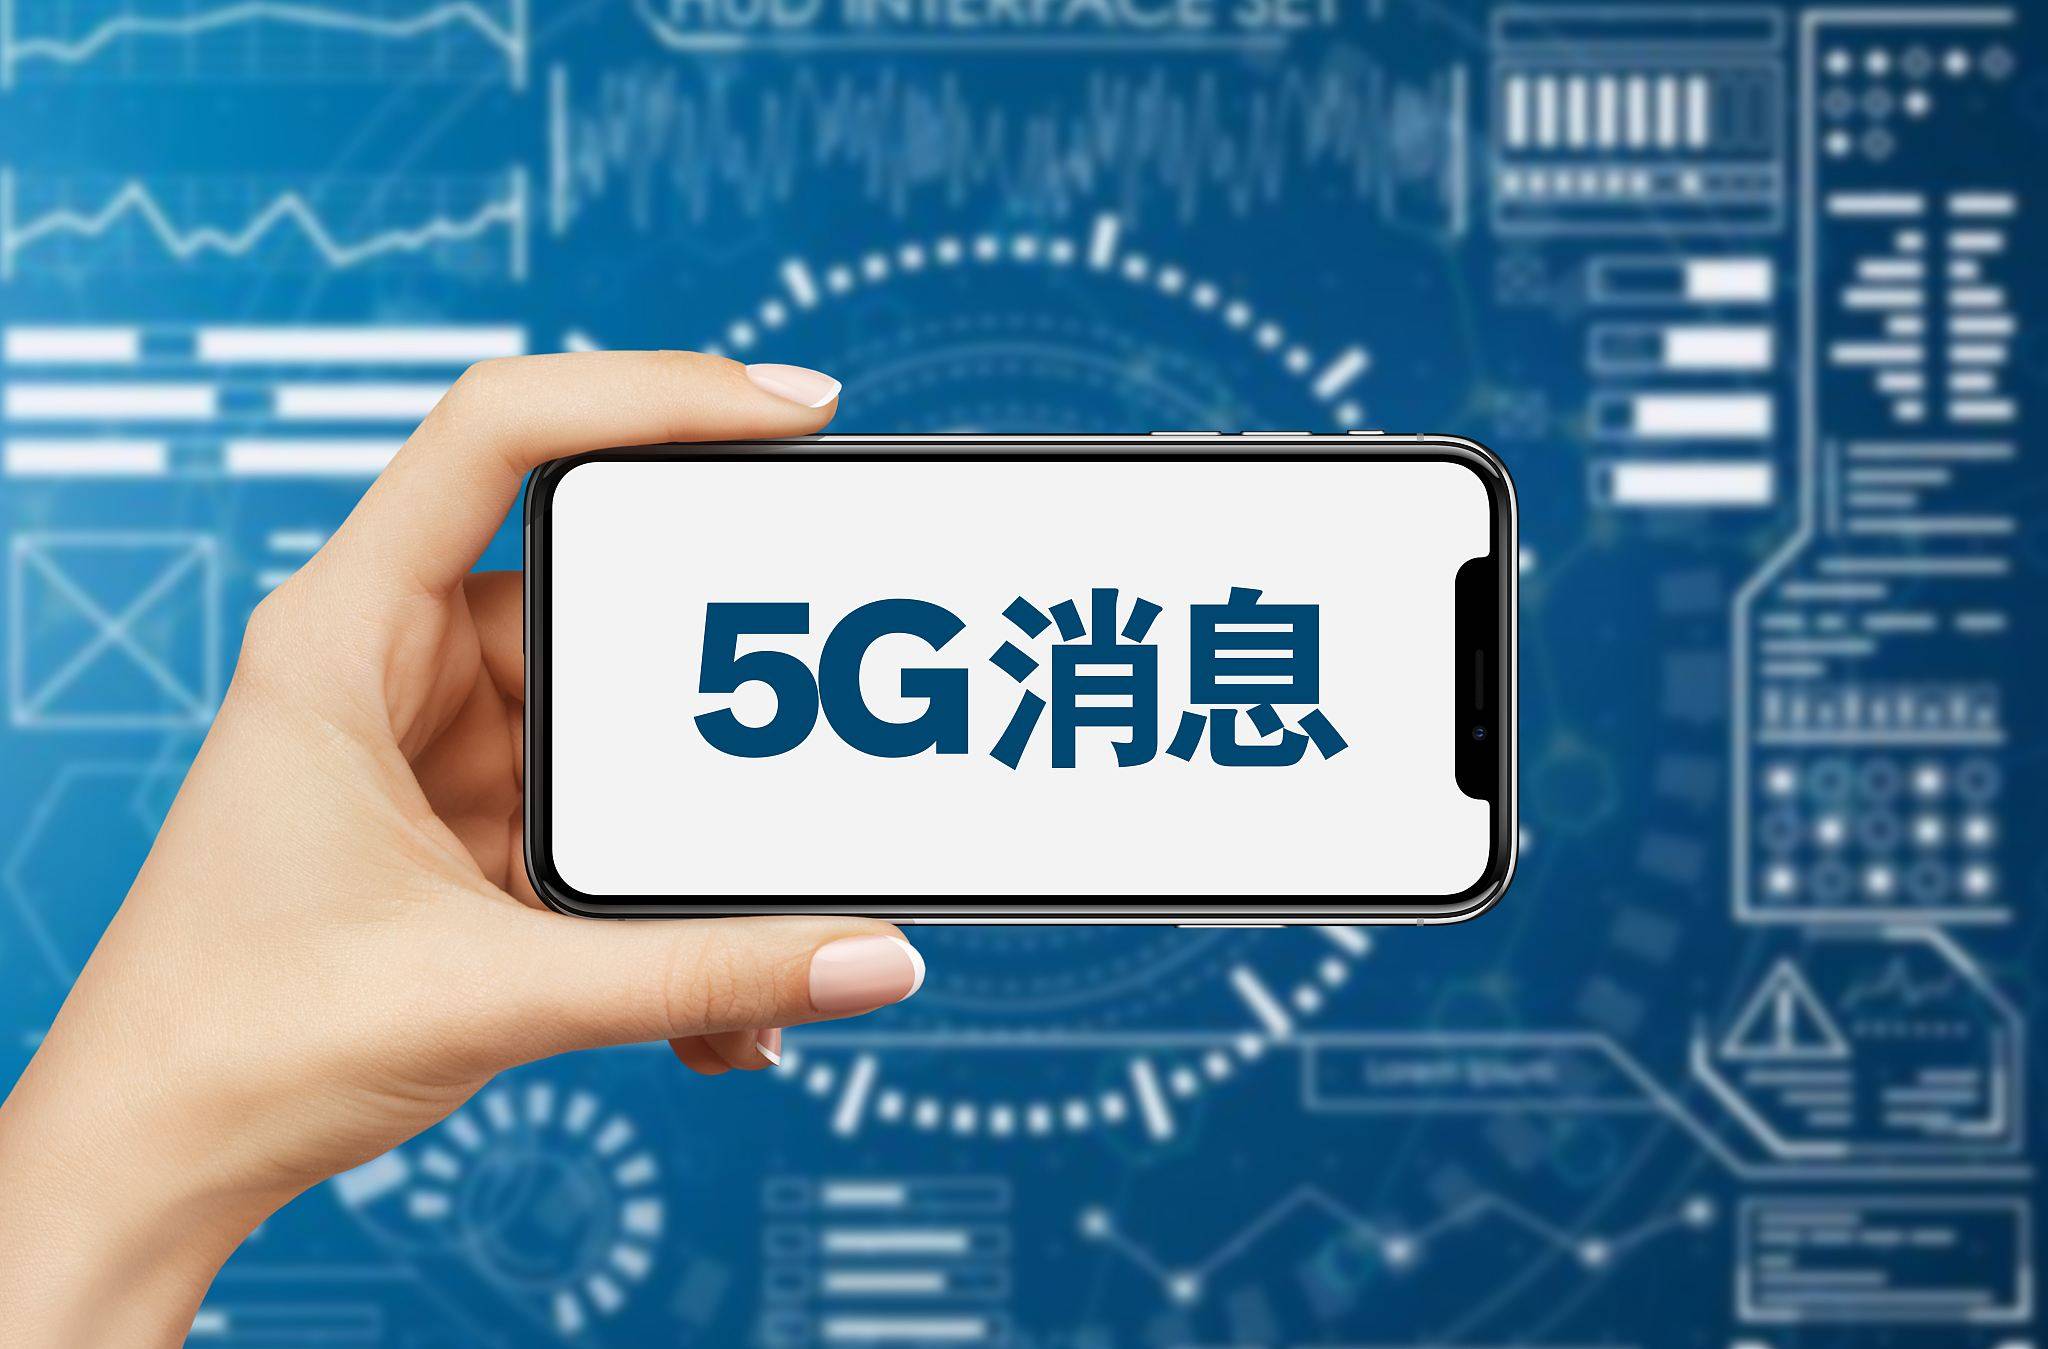 5G消息正式商用，騰訊迎來最強對手！能動搖微信的統治地位嗎？ 科技 第1張